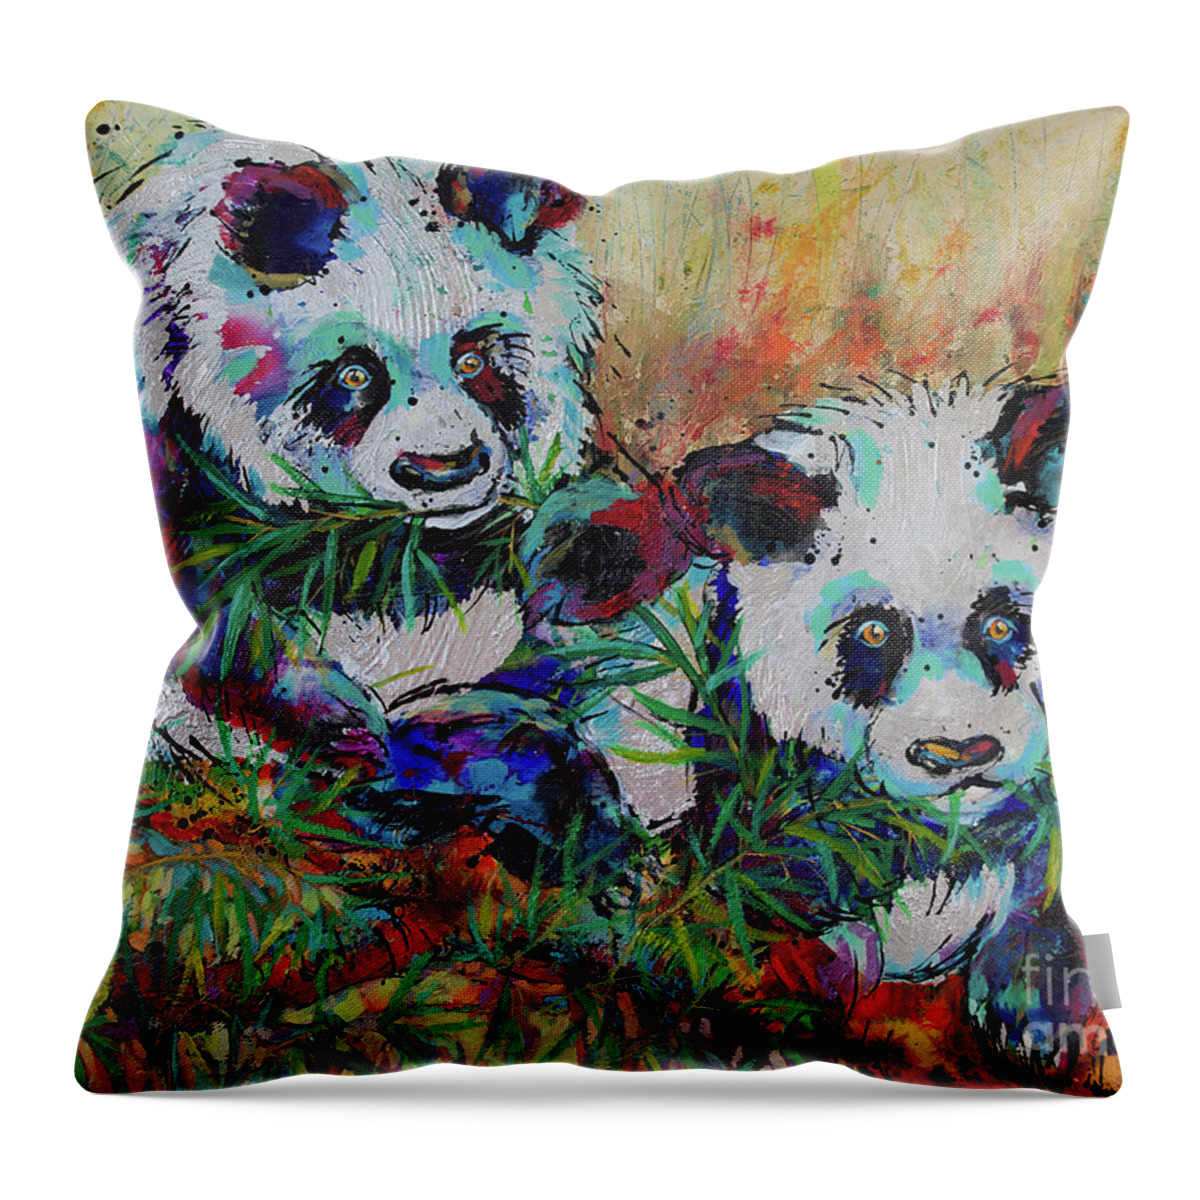 Pandas Throw Pillow featuring the painting Playful Giant Pandas by Jyotika Shroff